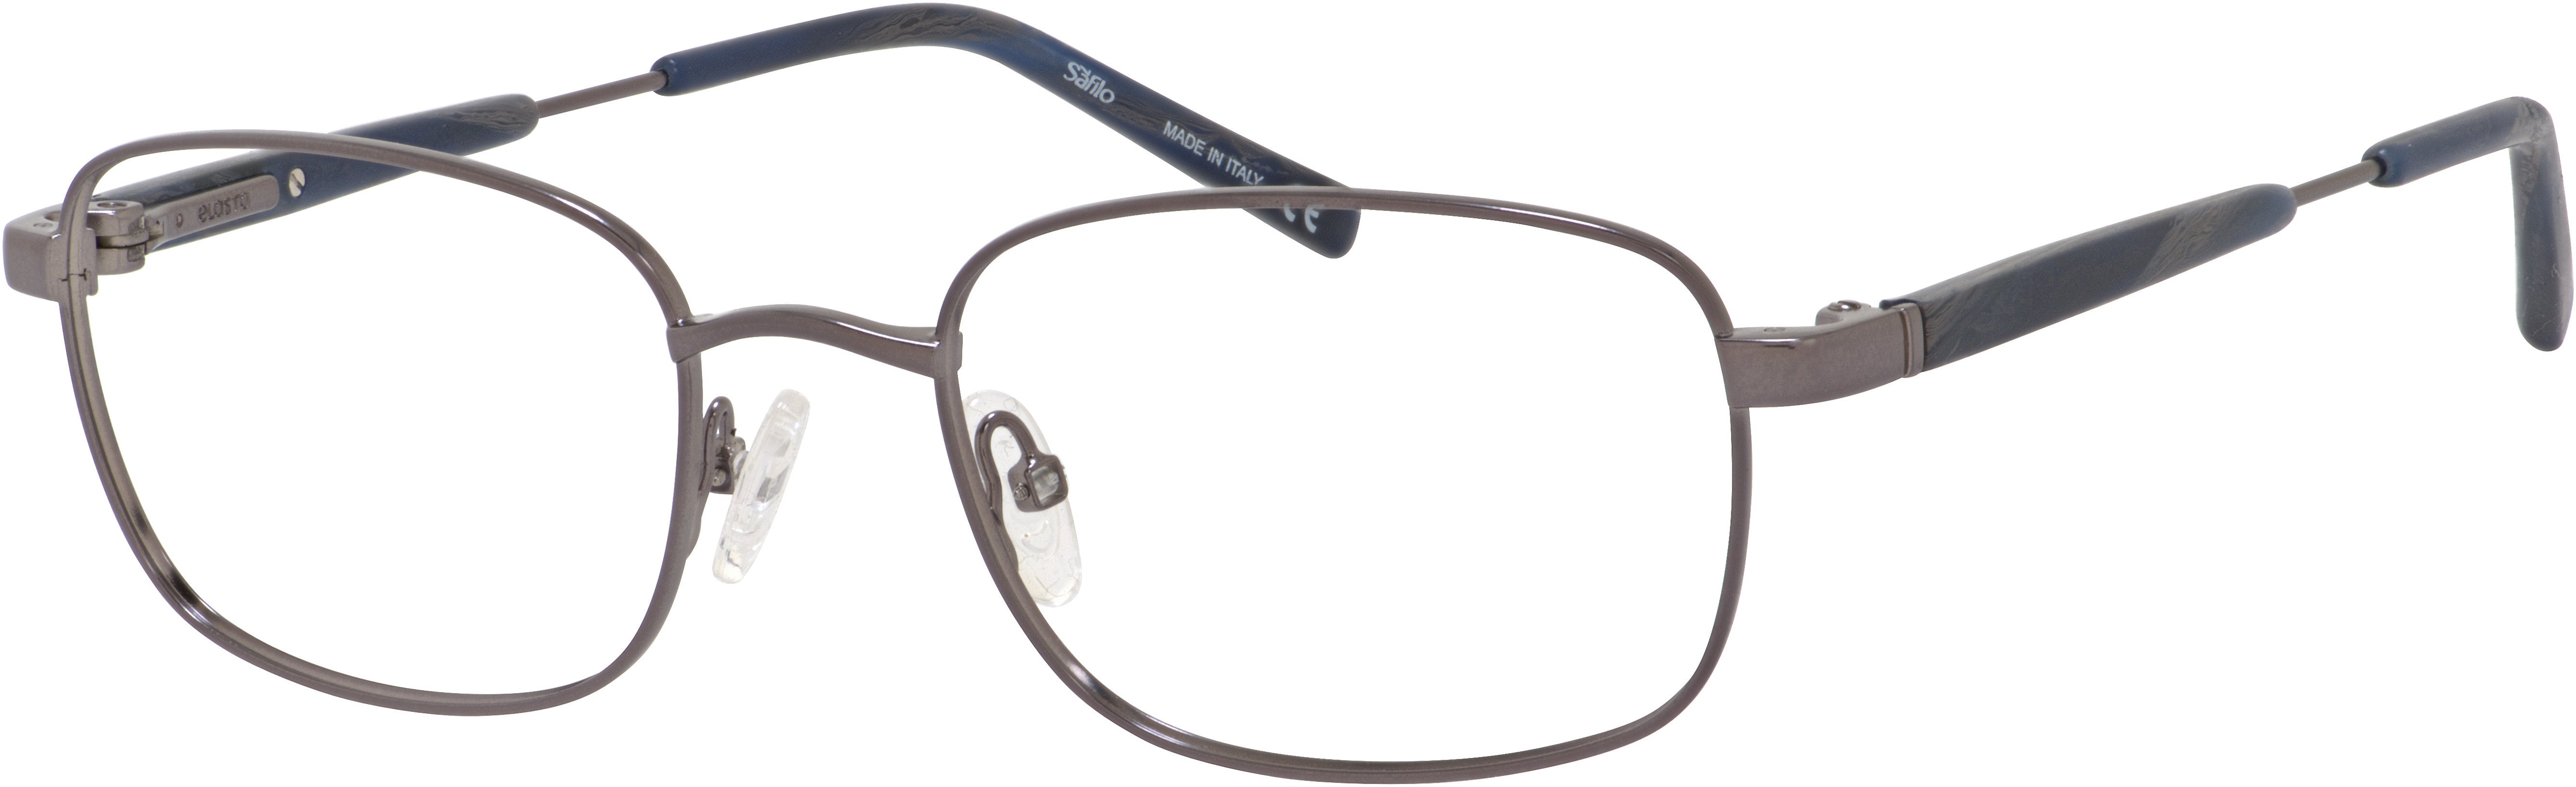  Elasta 7221 Rectangular Eyeglasses 06LB-06LB  Ruthenium (00 Demo Lens)